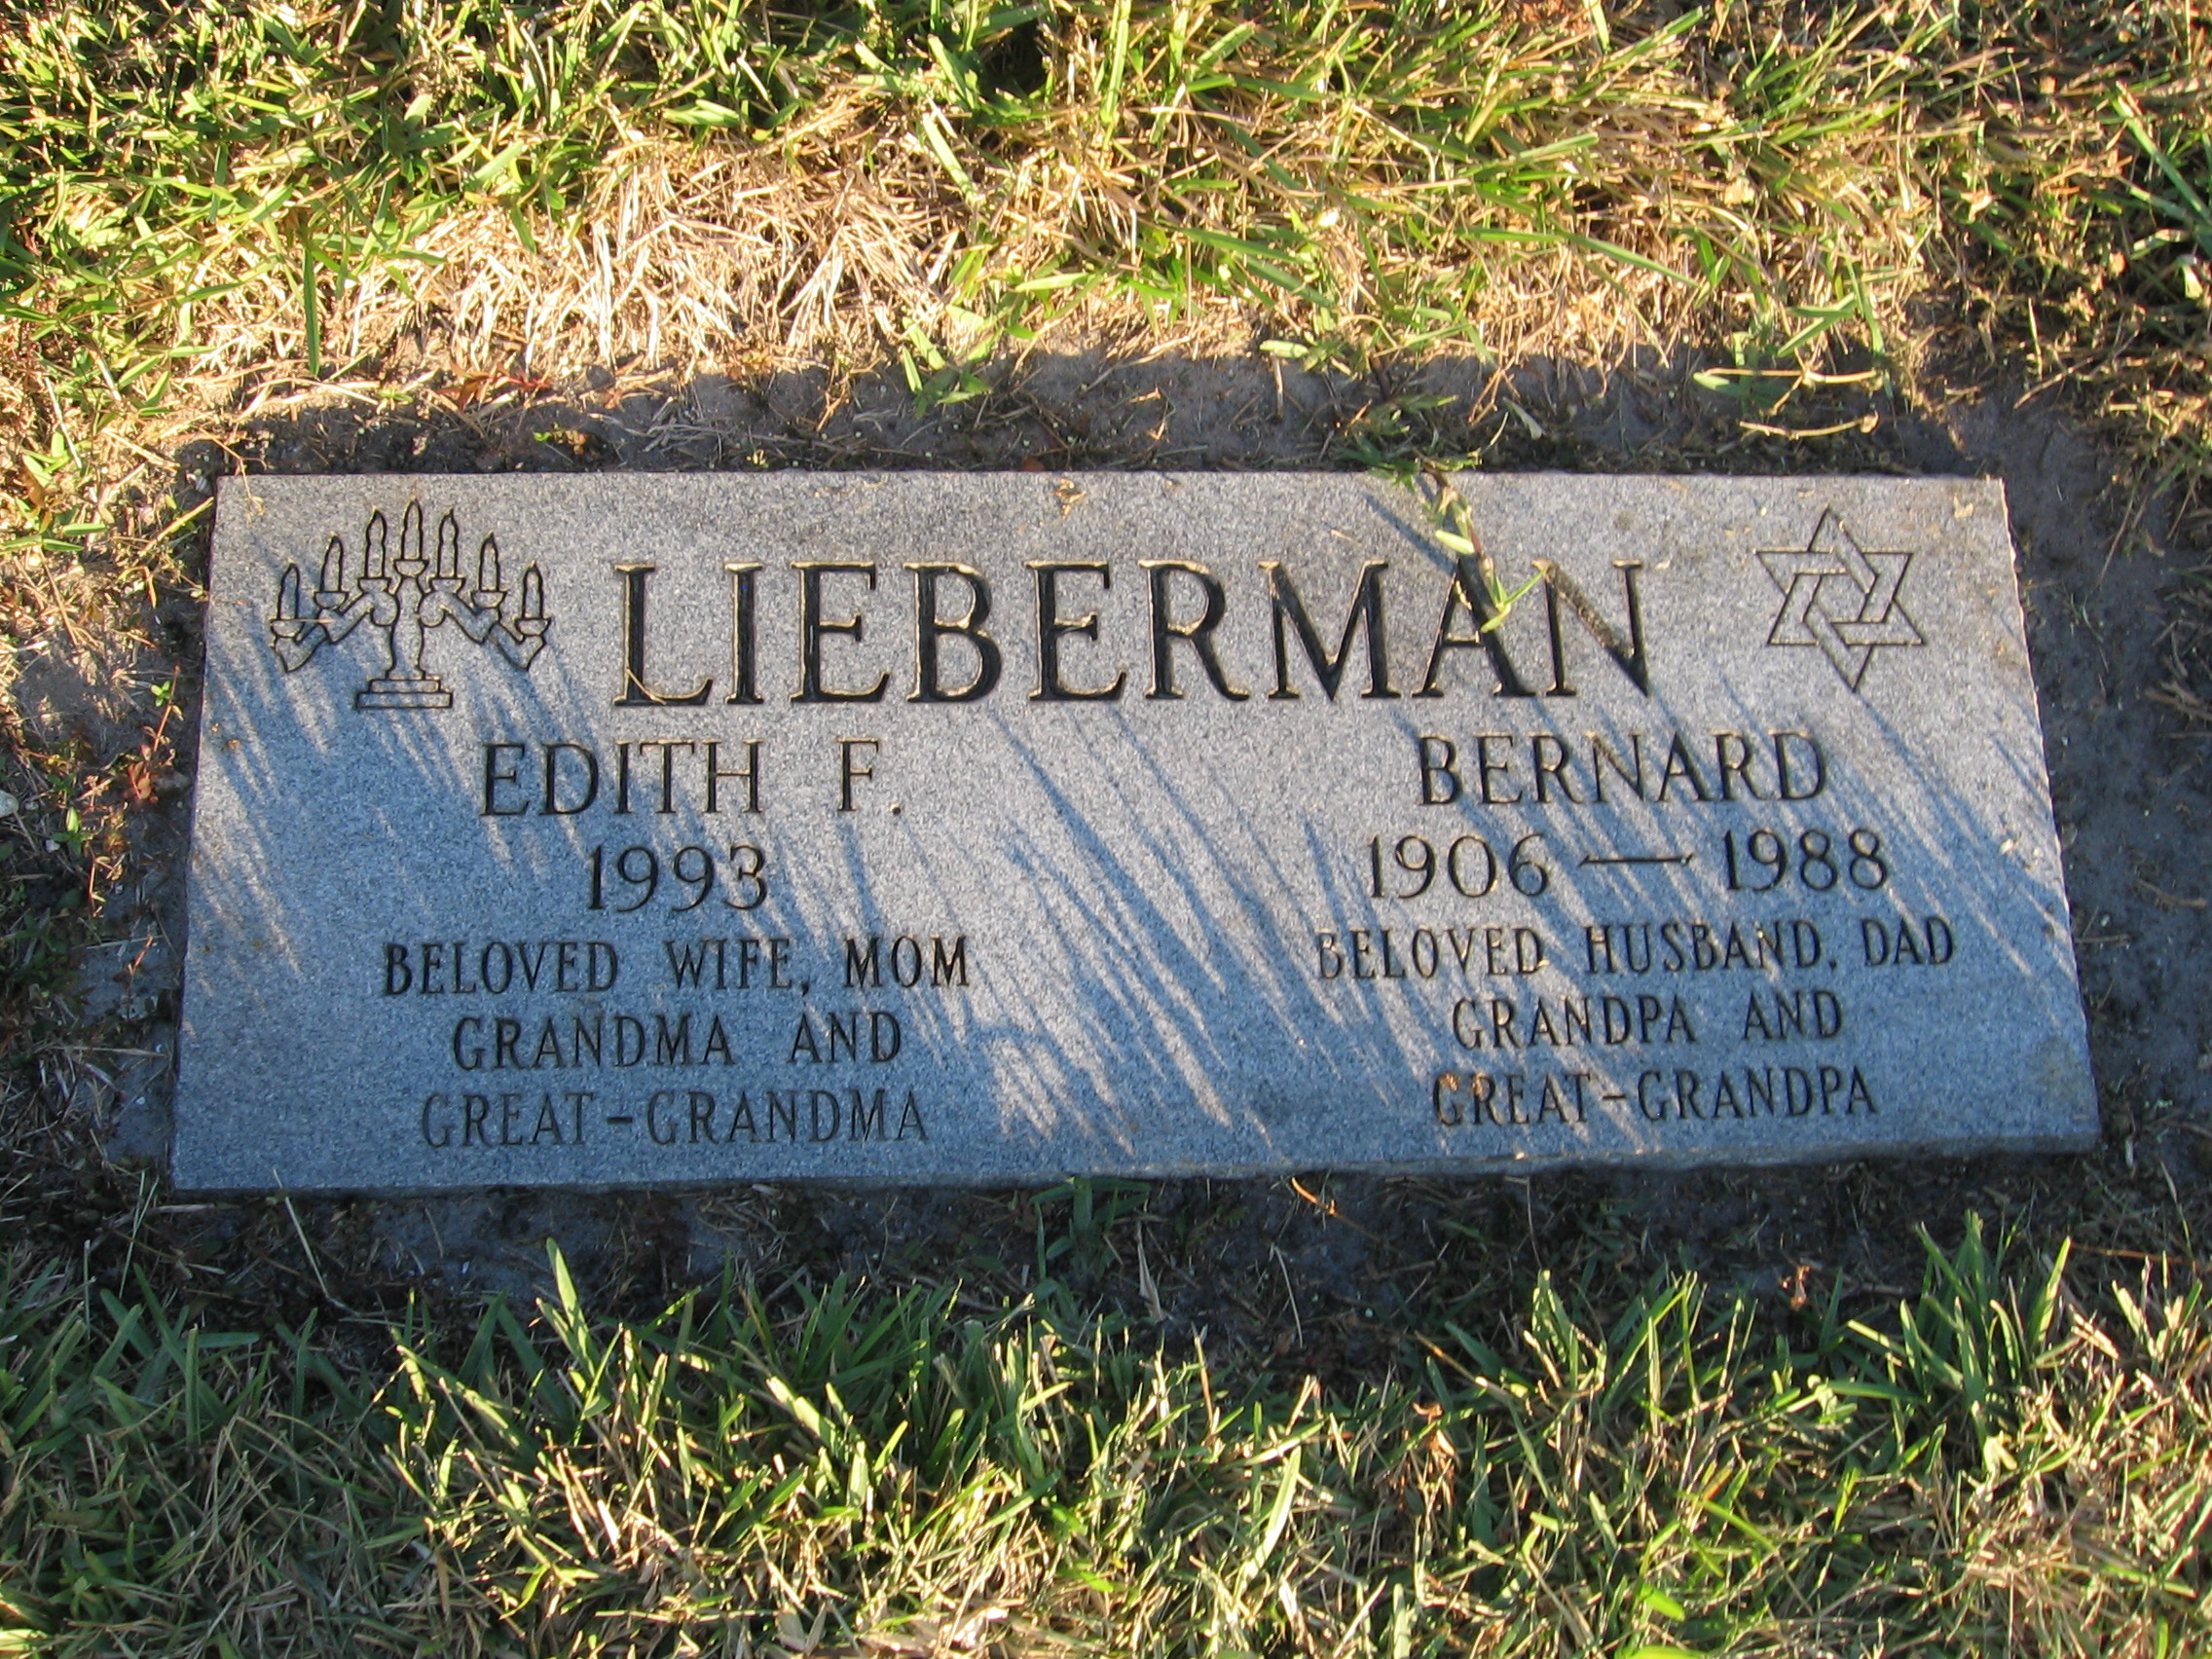 Edith F Lieberman